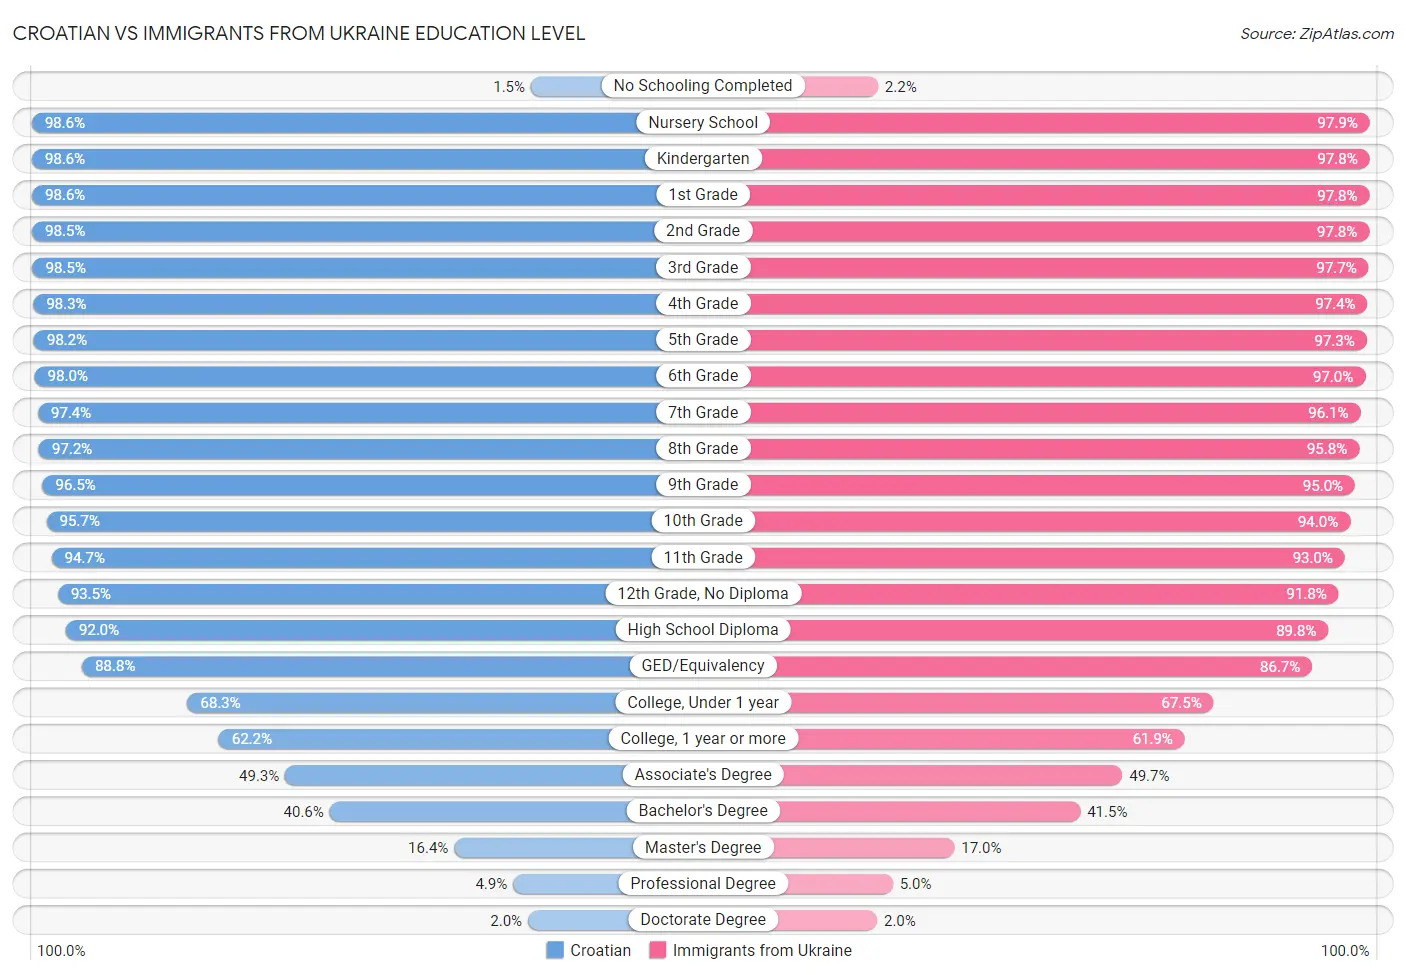 Croatian vs Immigrants from Ukraine Education Level